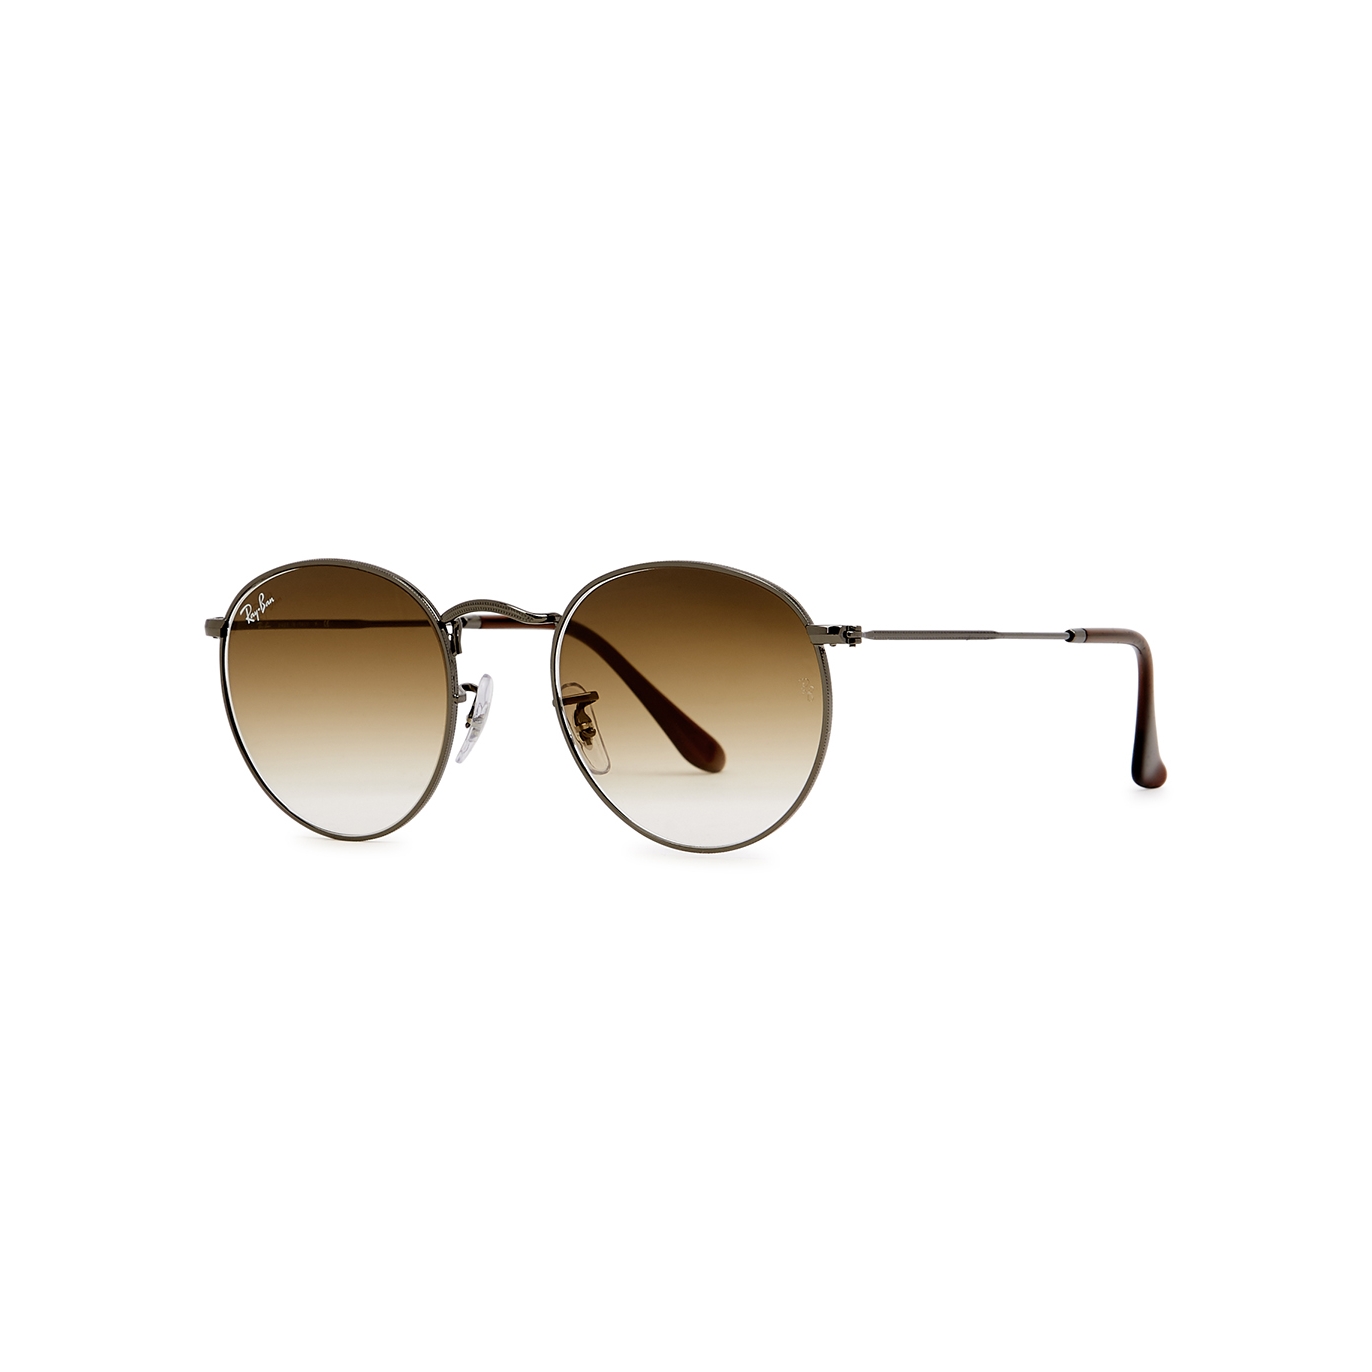 Ray-Ban Gunmetal Round-frame Sunglasses, Sunglasses, Brown Tips